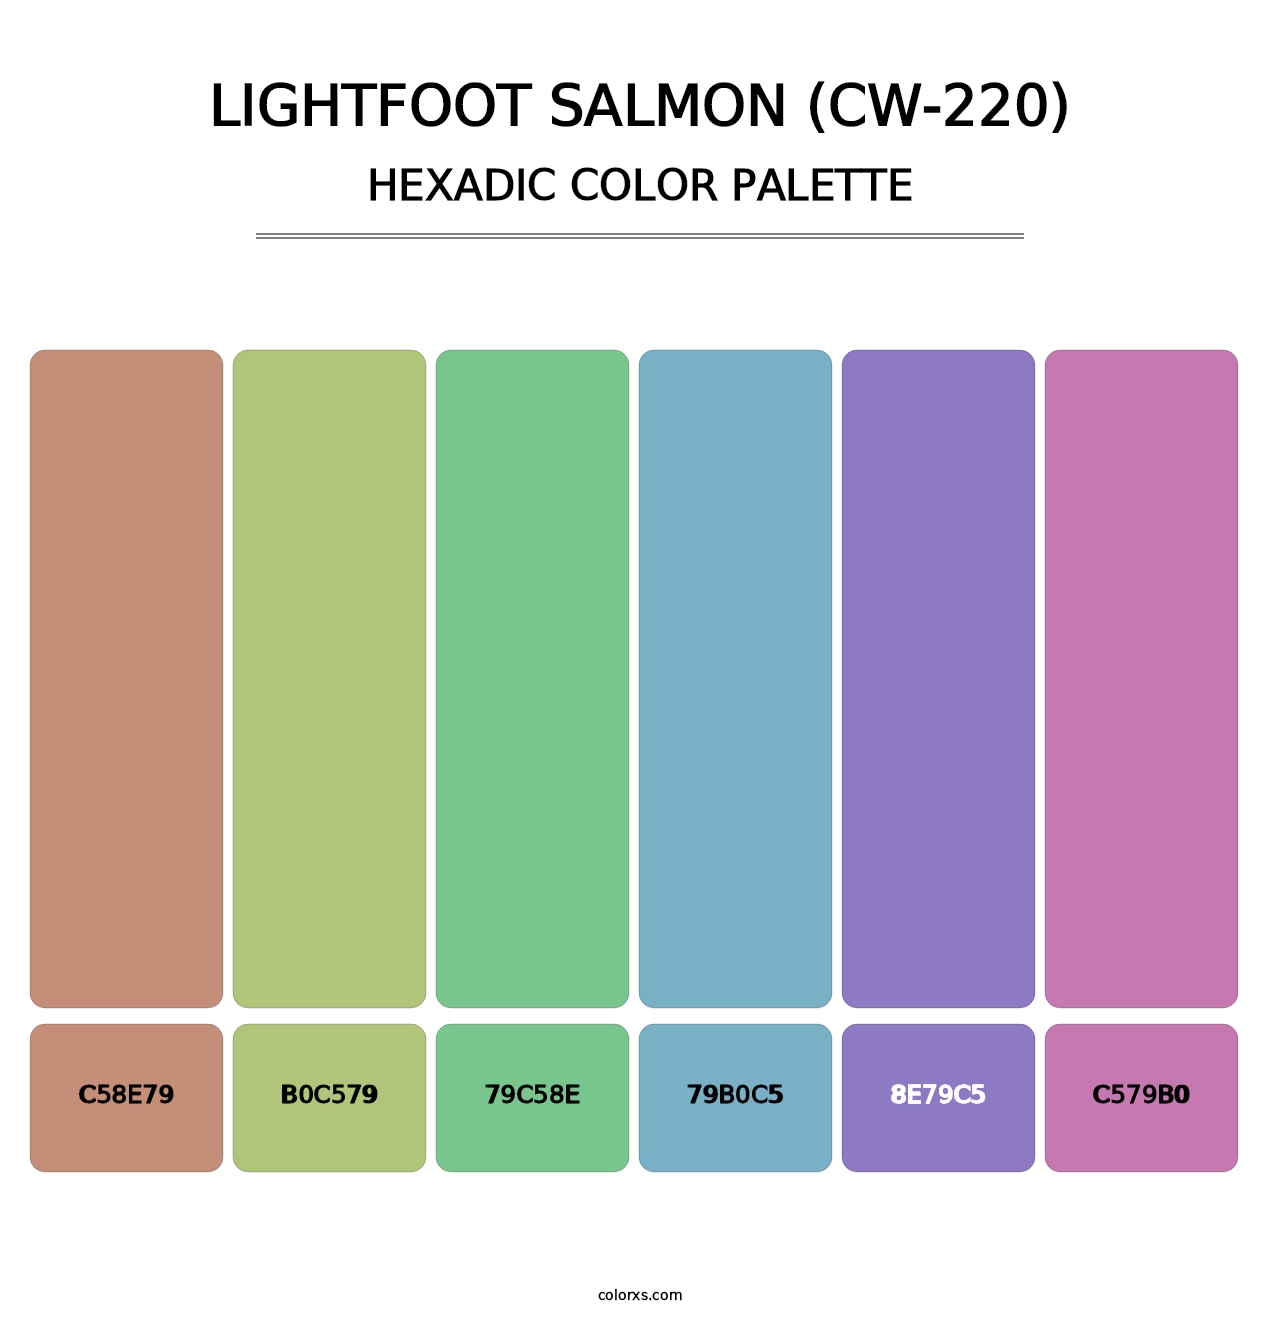 Lightfoot Salmon (CW-220) - Hexadic Color Palette